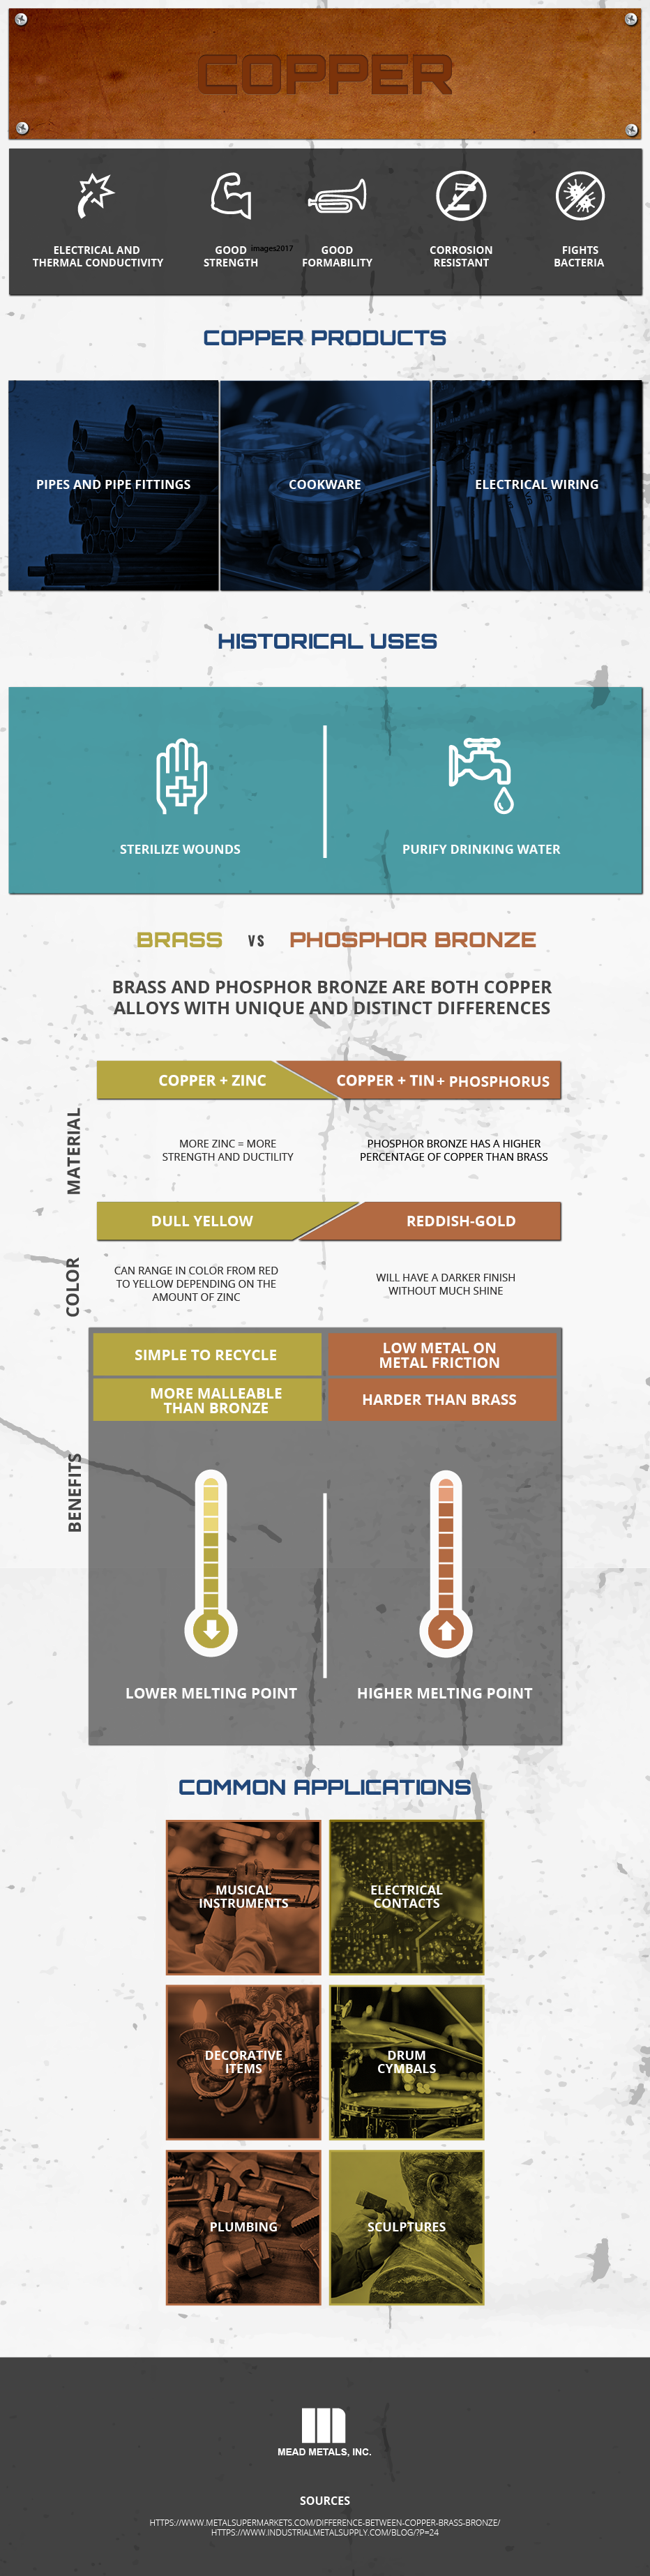 Copper: Brass vs Phosphor Bronze [Infographic]